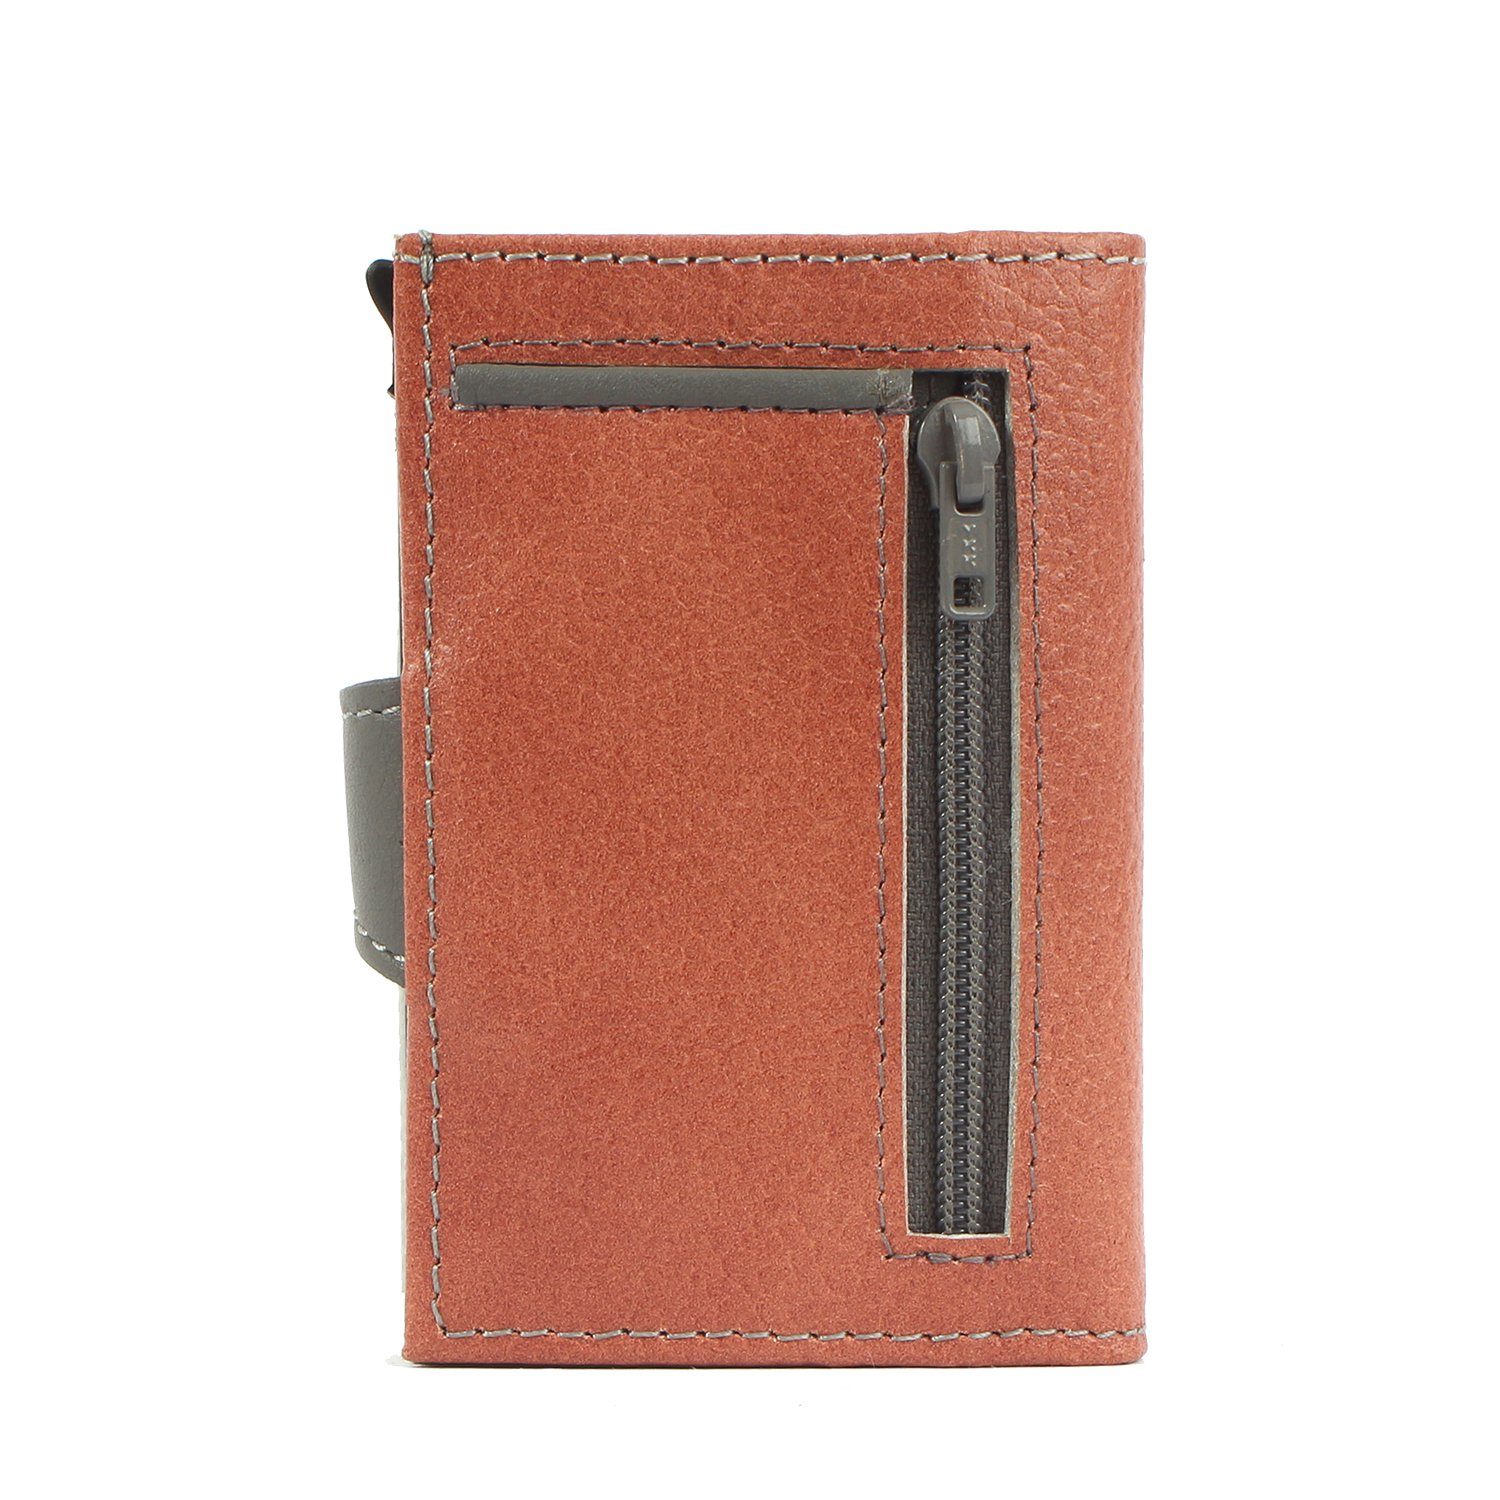 Mini Kreditkartenbörse noonyu salmon leather, aus single Upcycling Margelisch Leder Geldbörse